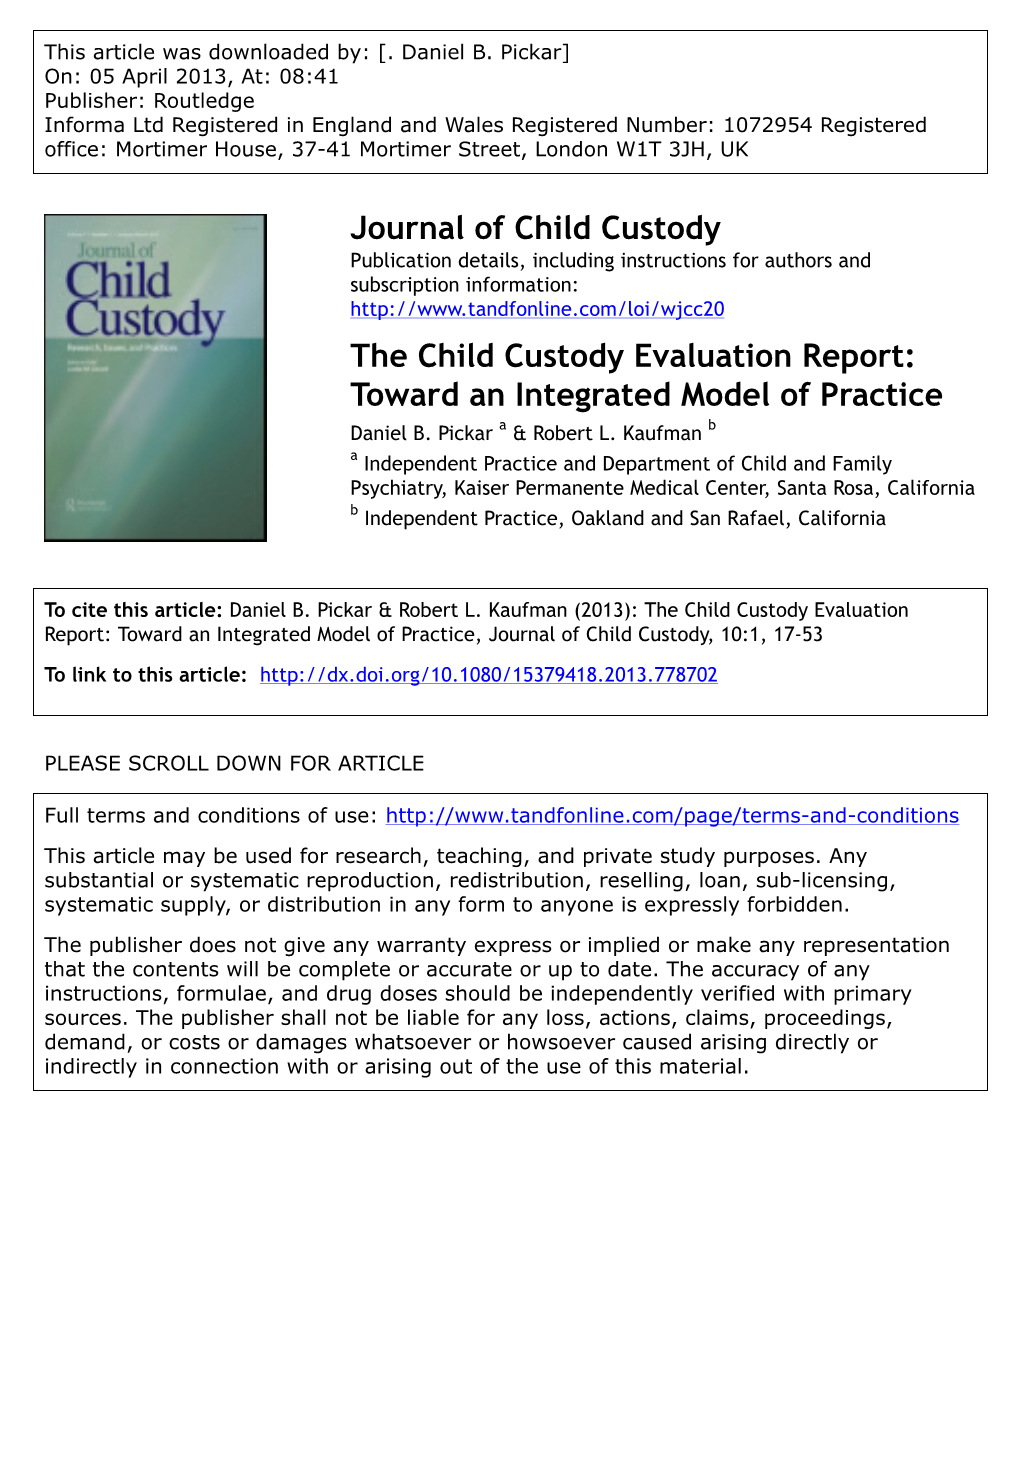 The Child Custody Evaluation Report: Toward an Integrated Model of Practice Daniel B